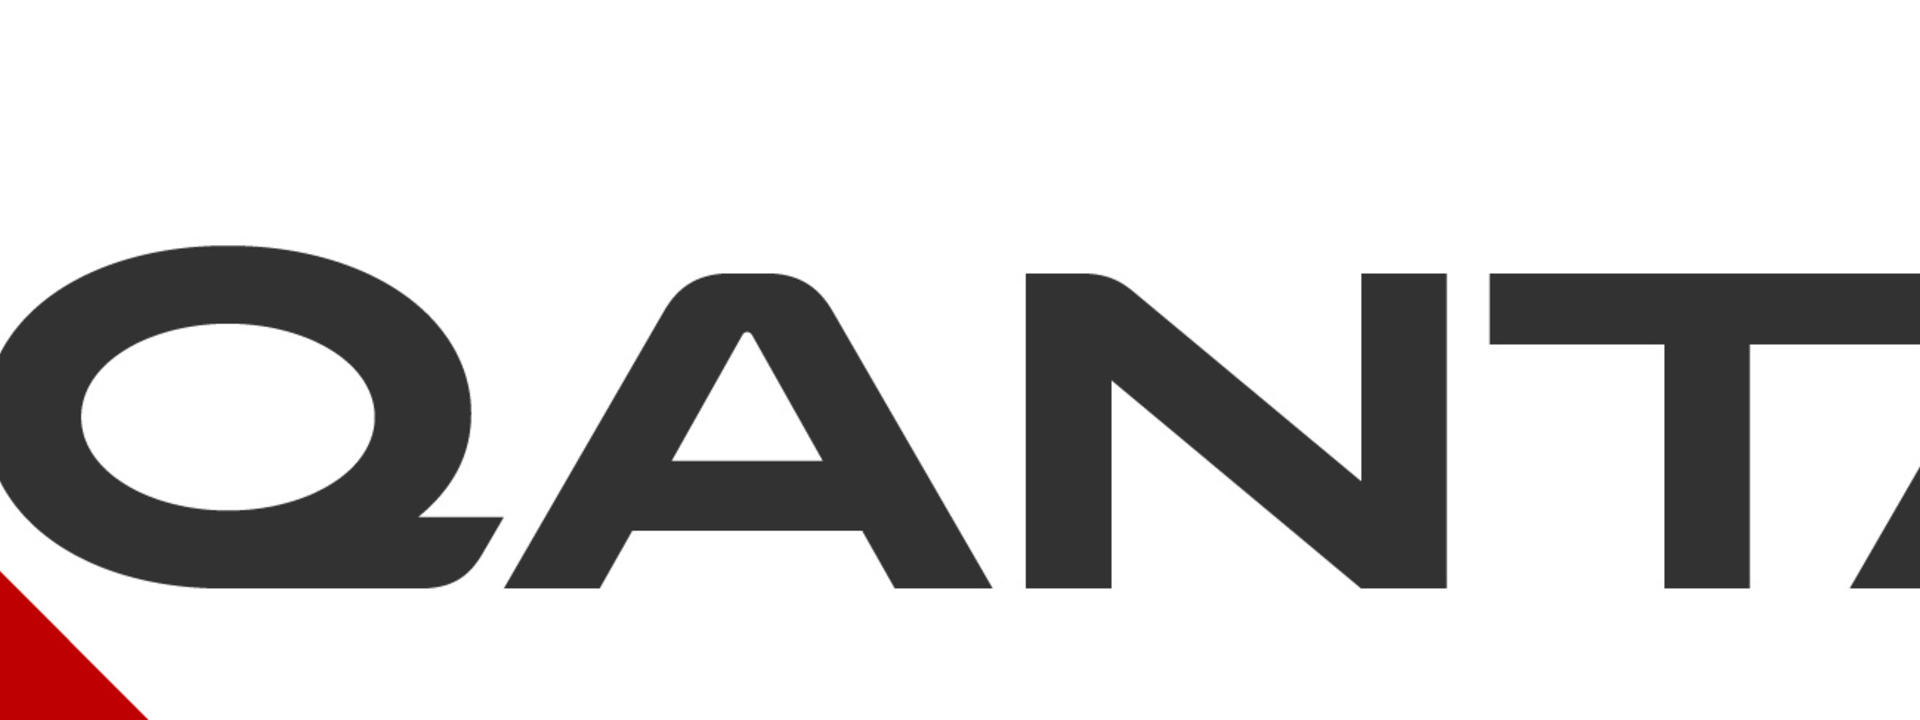 Logo: Qantas Airways Limited